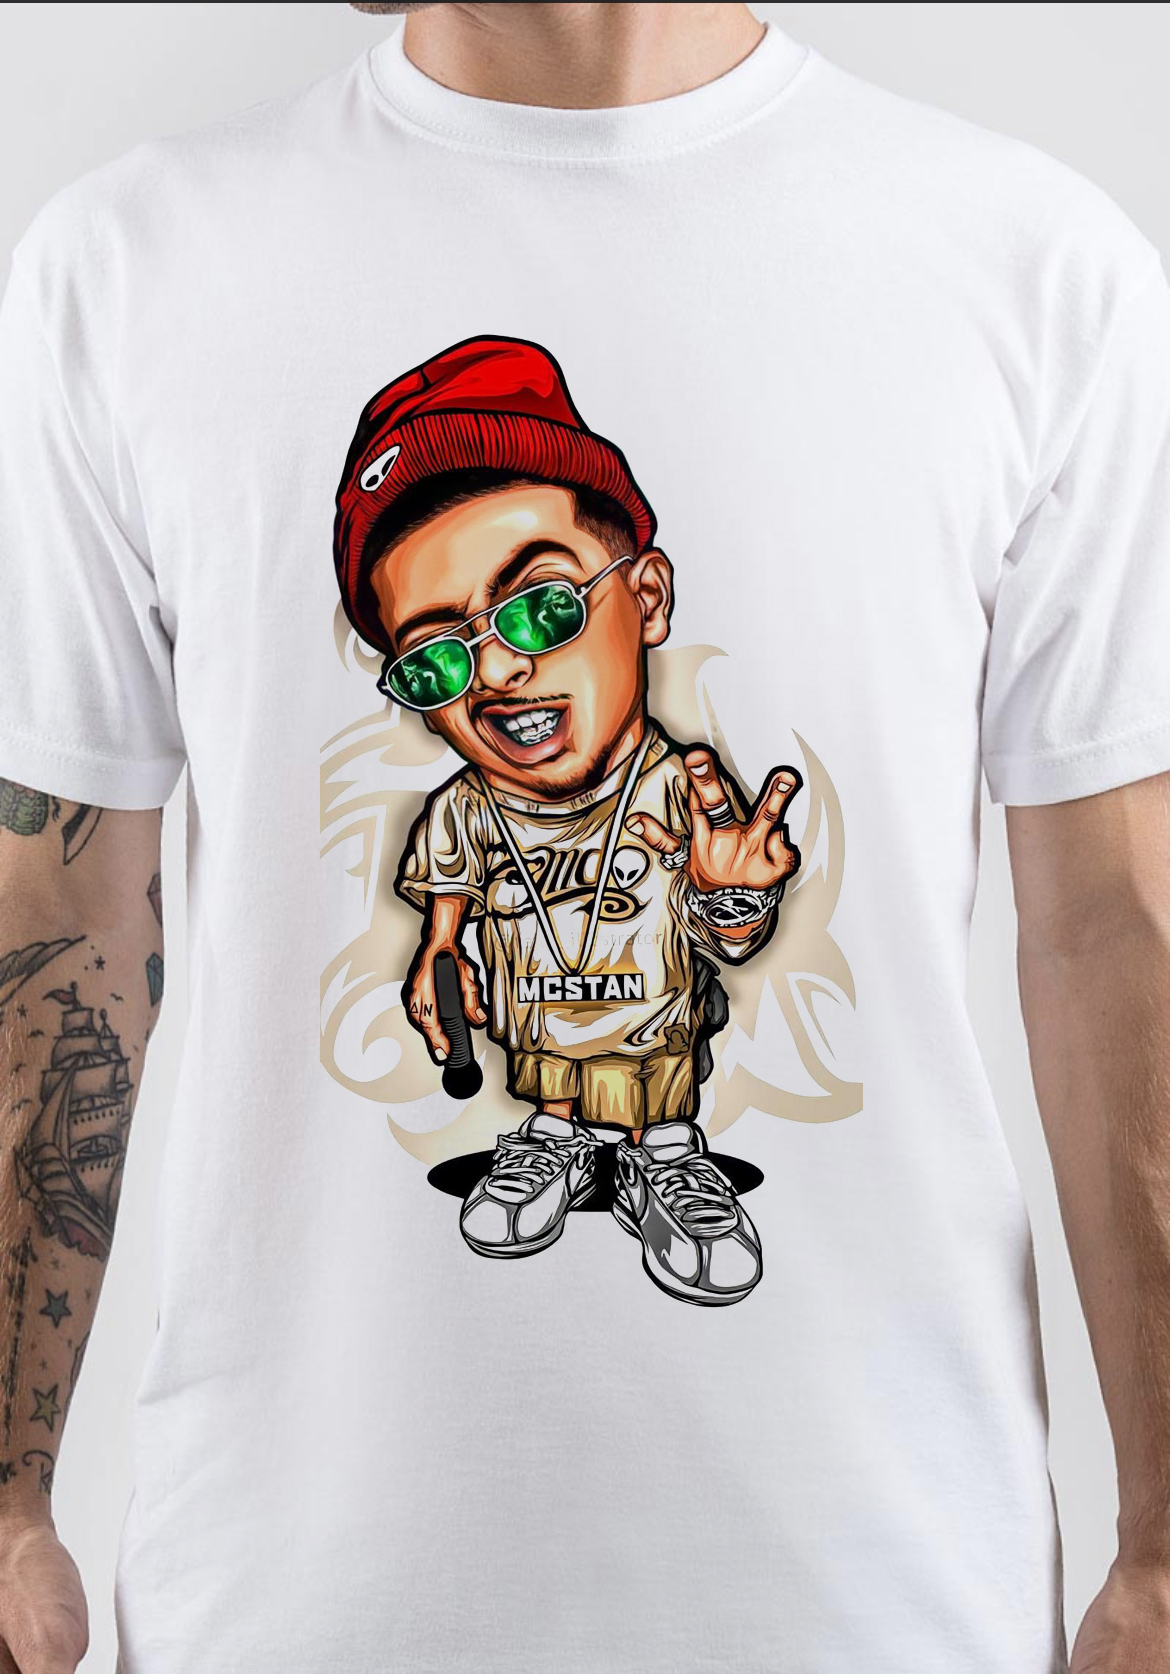 MC Stan Shirt